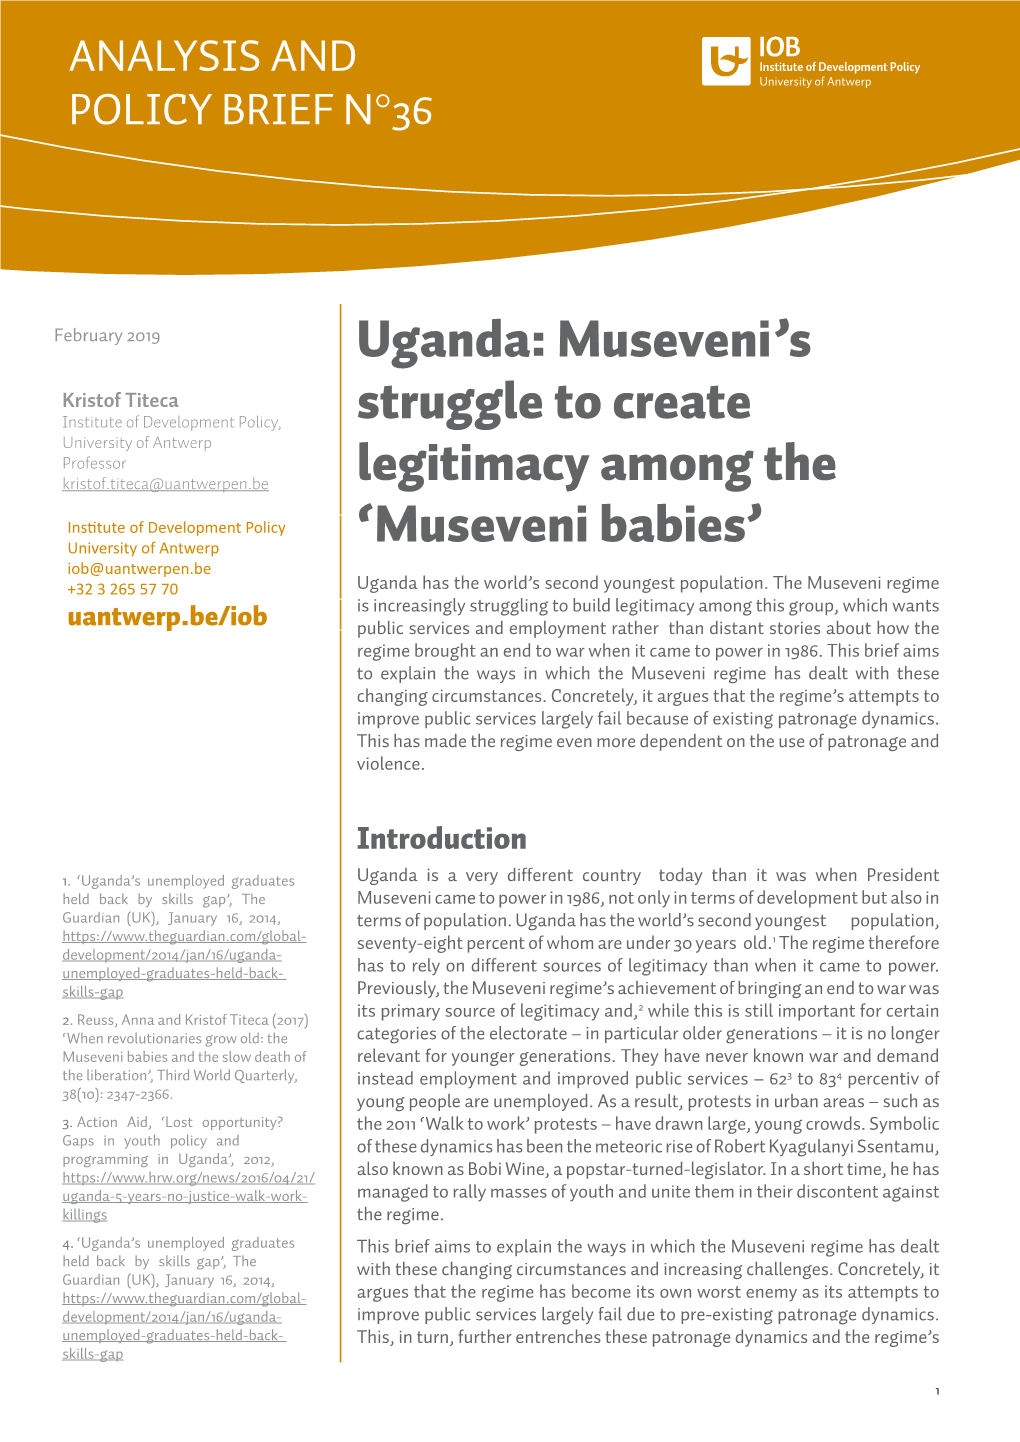 Uganda: Museveni's Struggle to Create Legitimacy Among the 'Museveni